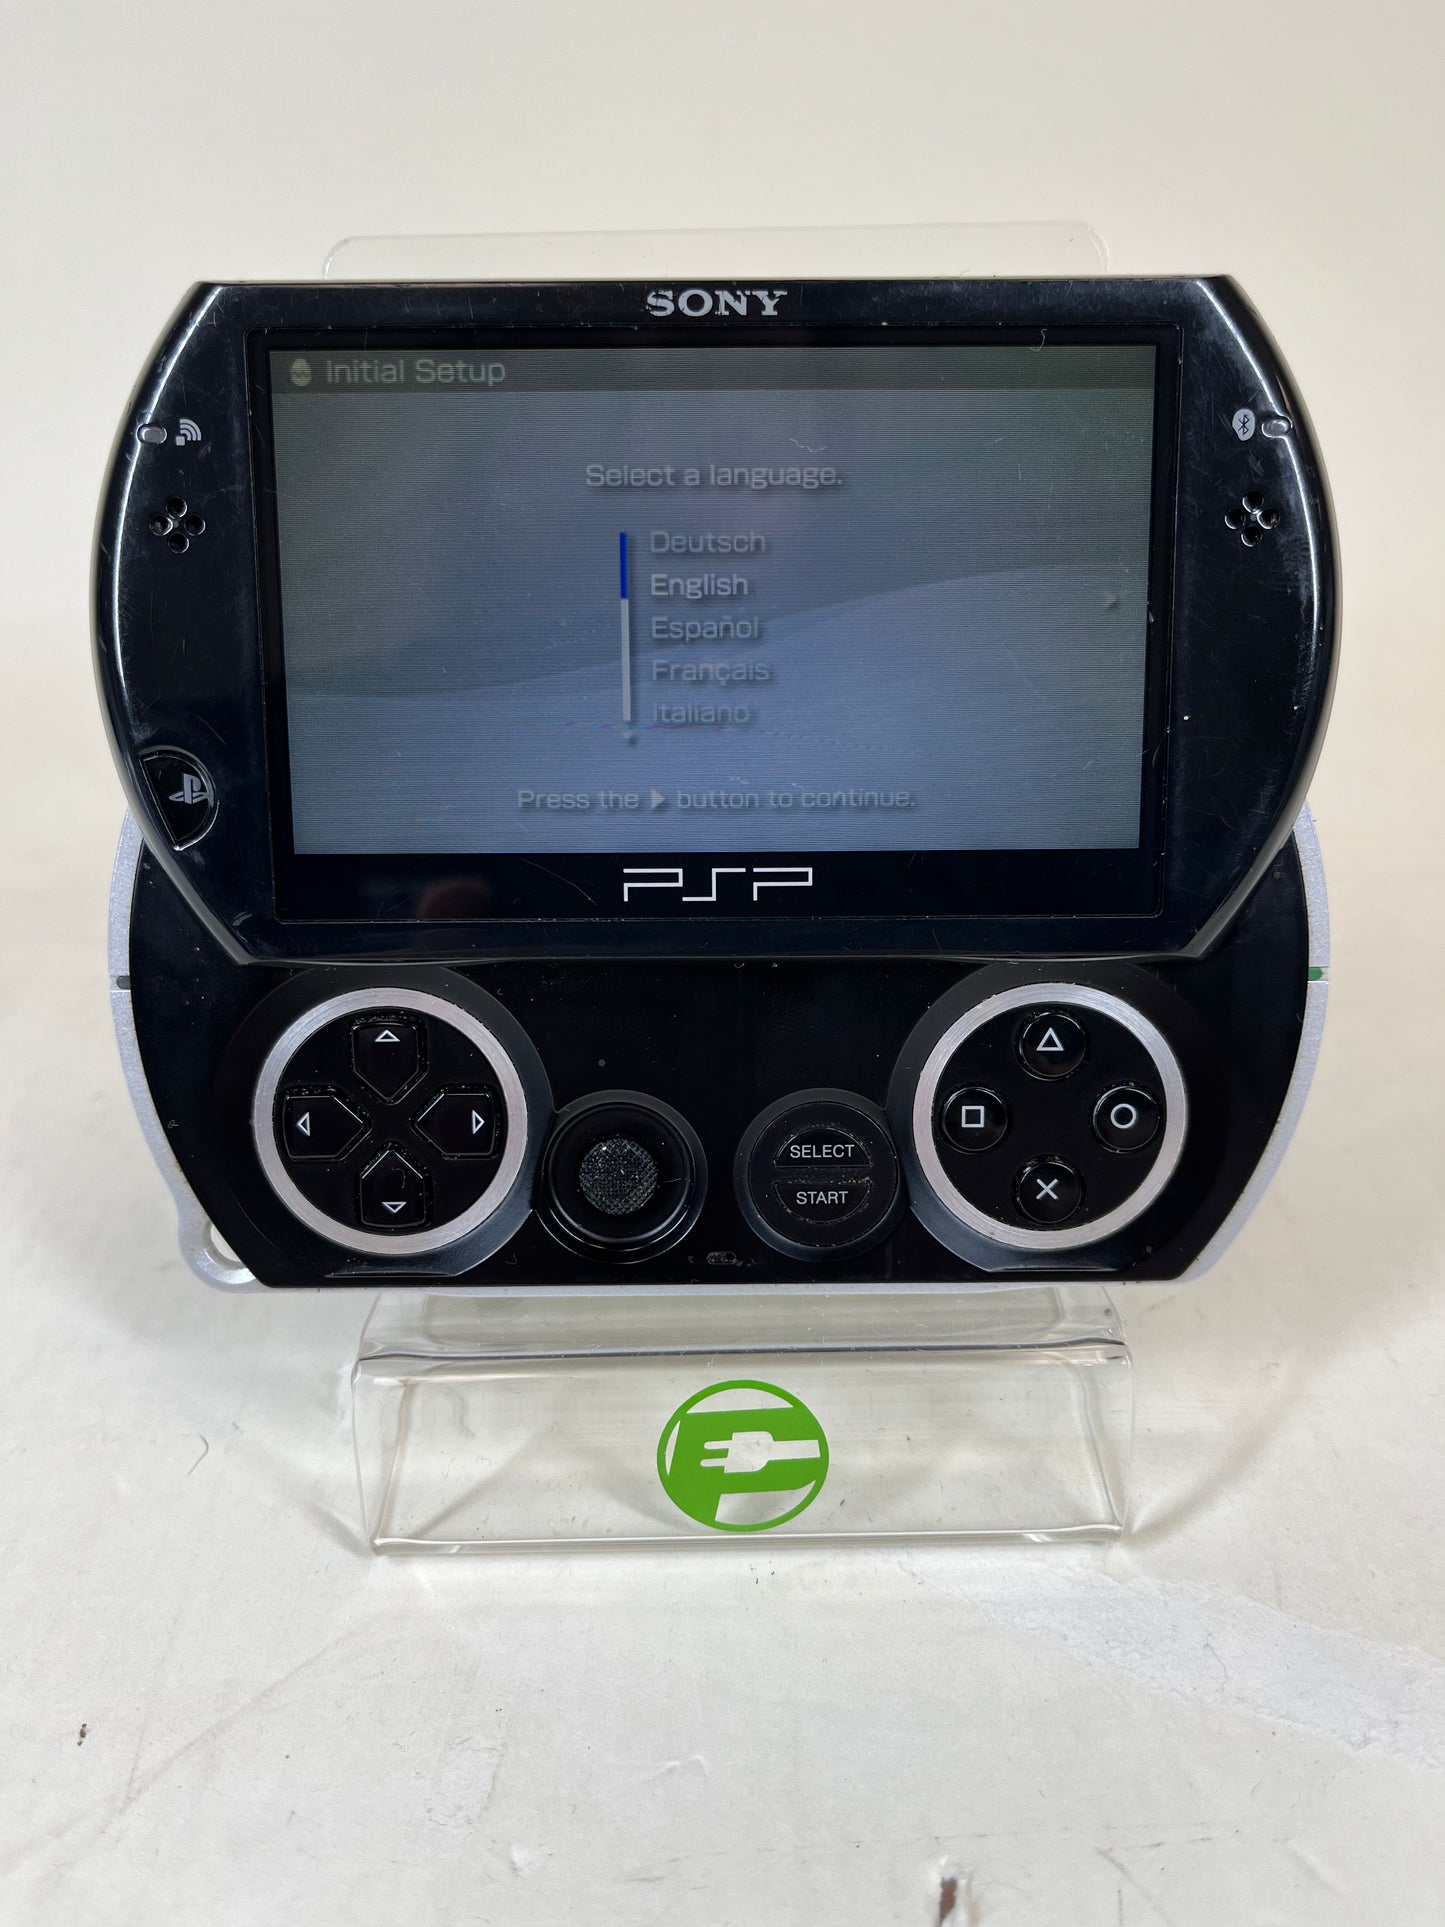 Sony Playstation Portable Go PSP PSP-N1001 Handheld Game System Black